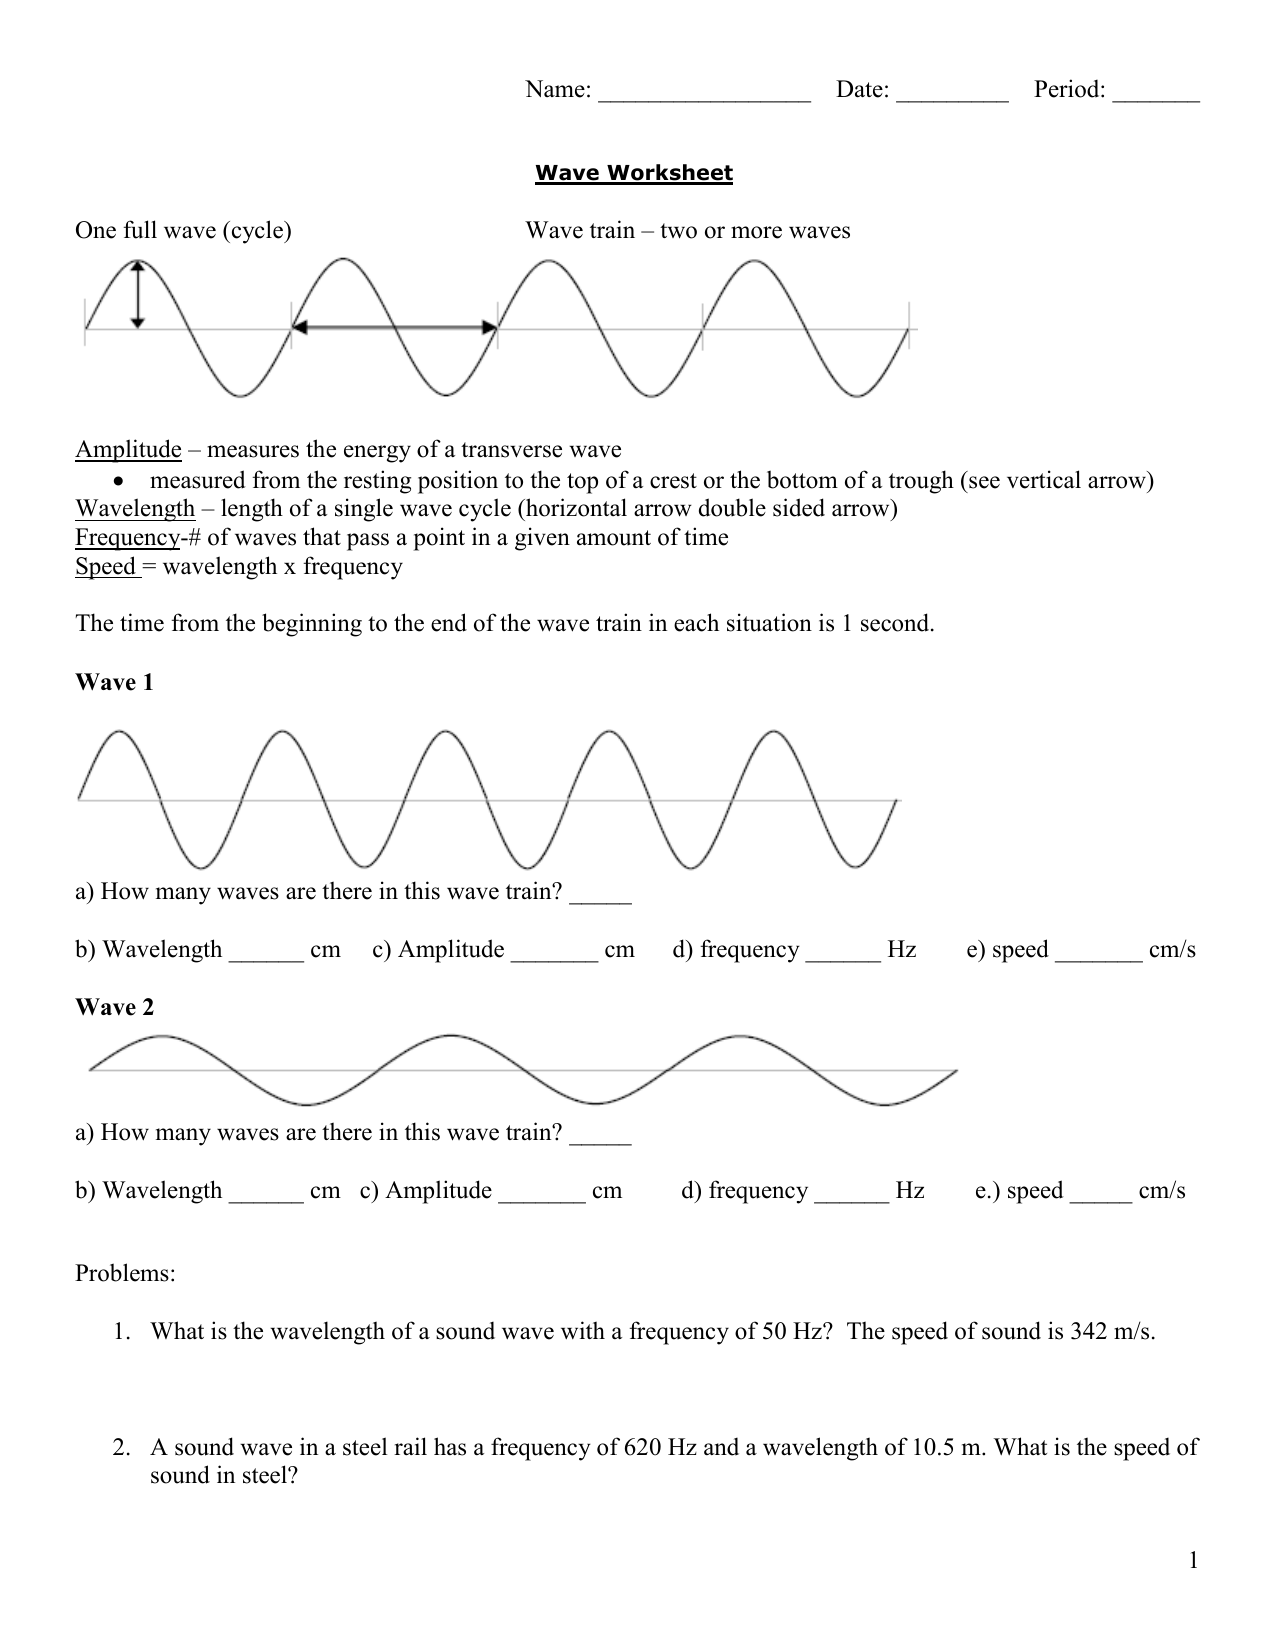 waves-and-sound-worksheet-pdf-sound-waves-worksheet-alu-ban-academia-edu-4-1-to-show-the